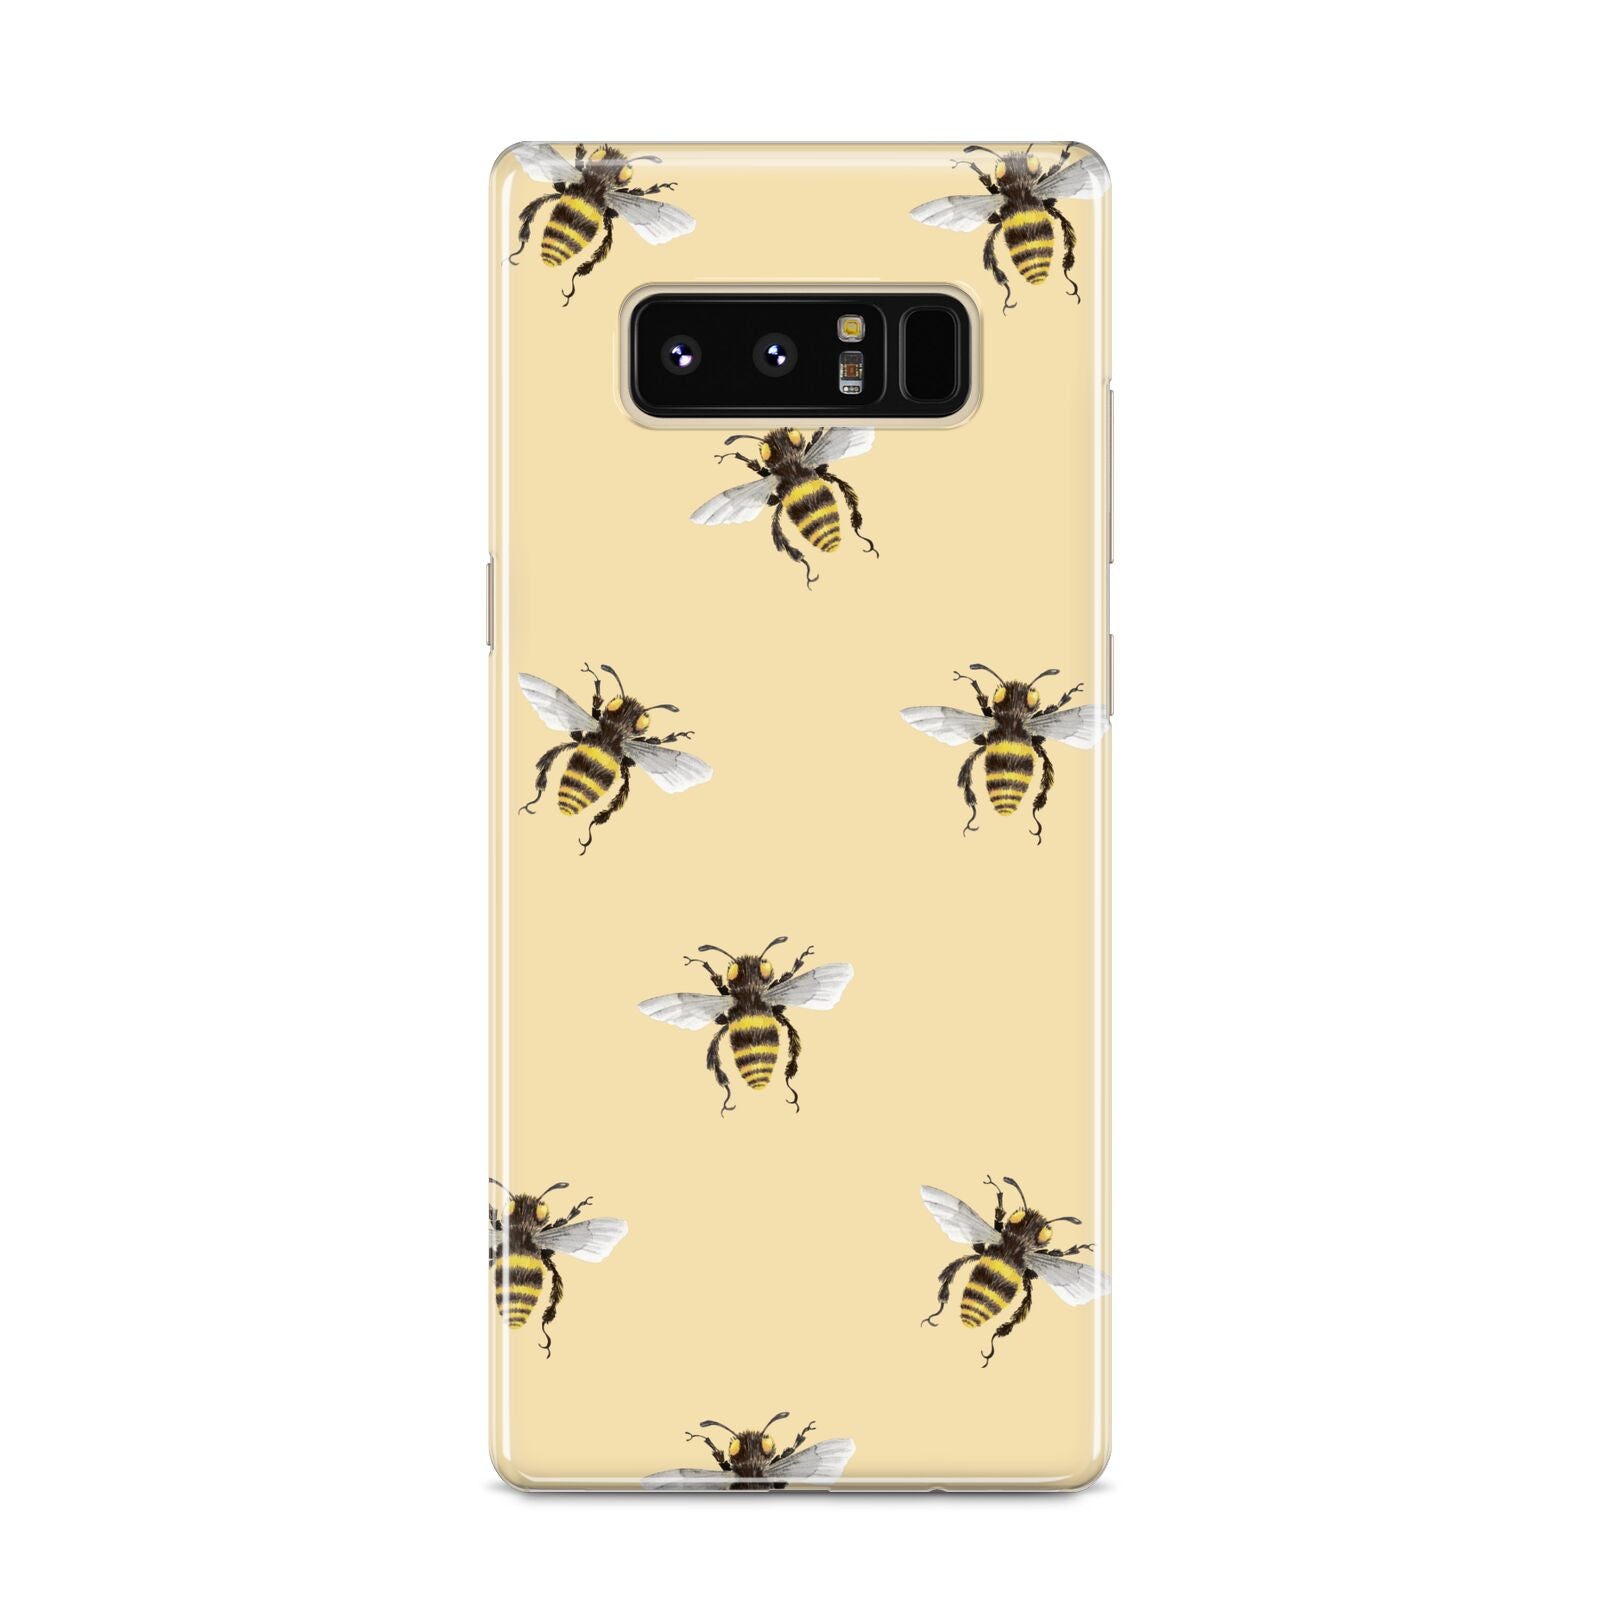 Bee Illustrations Samsung Galaxy S8 Case